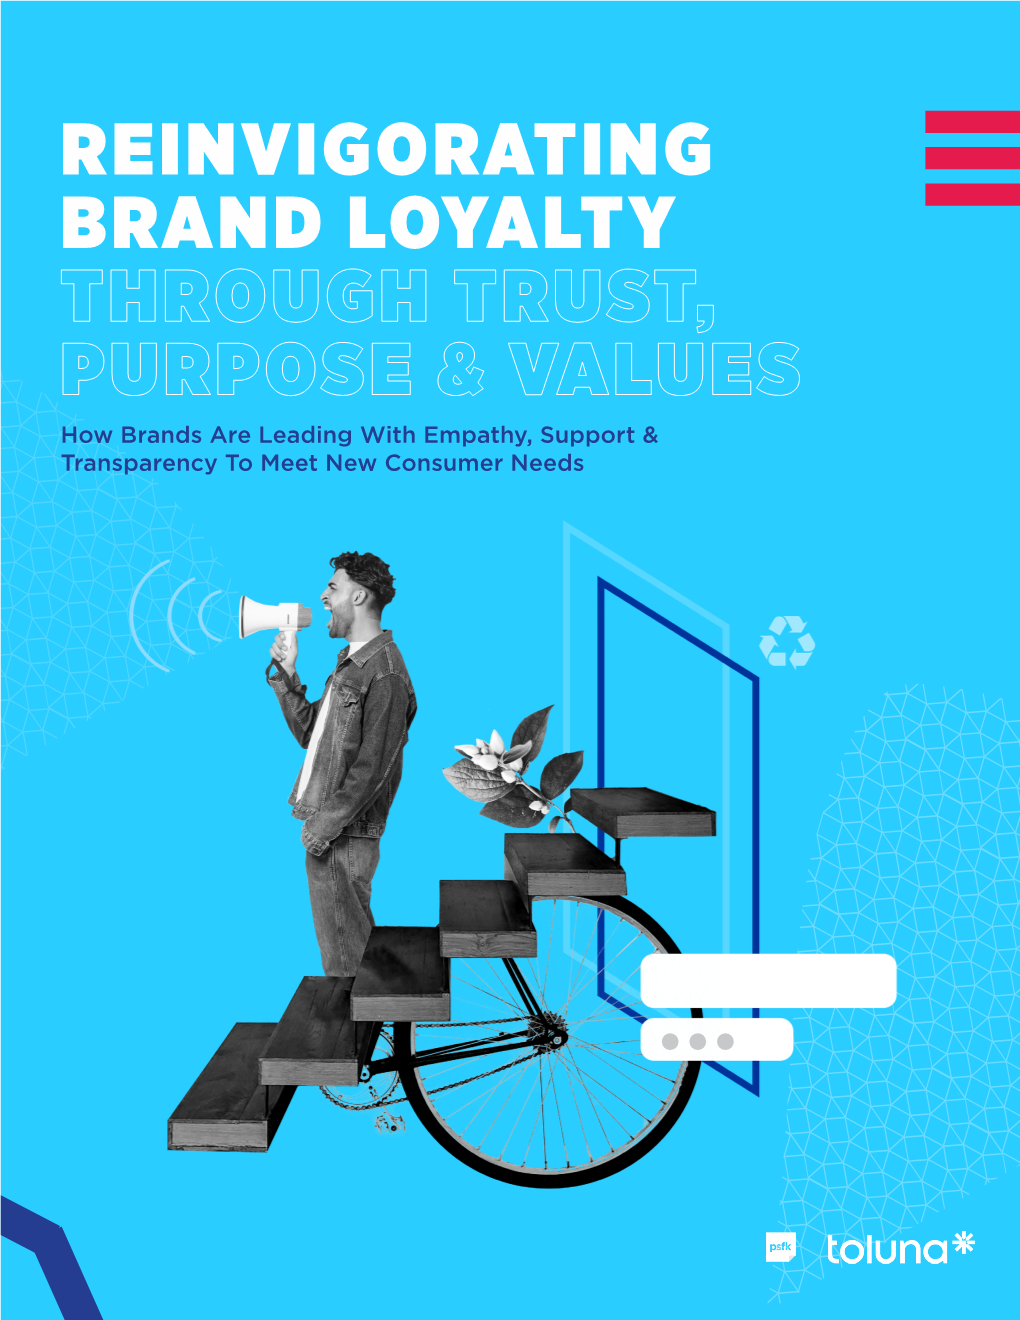 Reinvigorating Brand Loyalty Through Trust, Purpose & Values